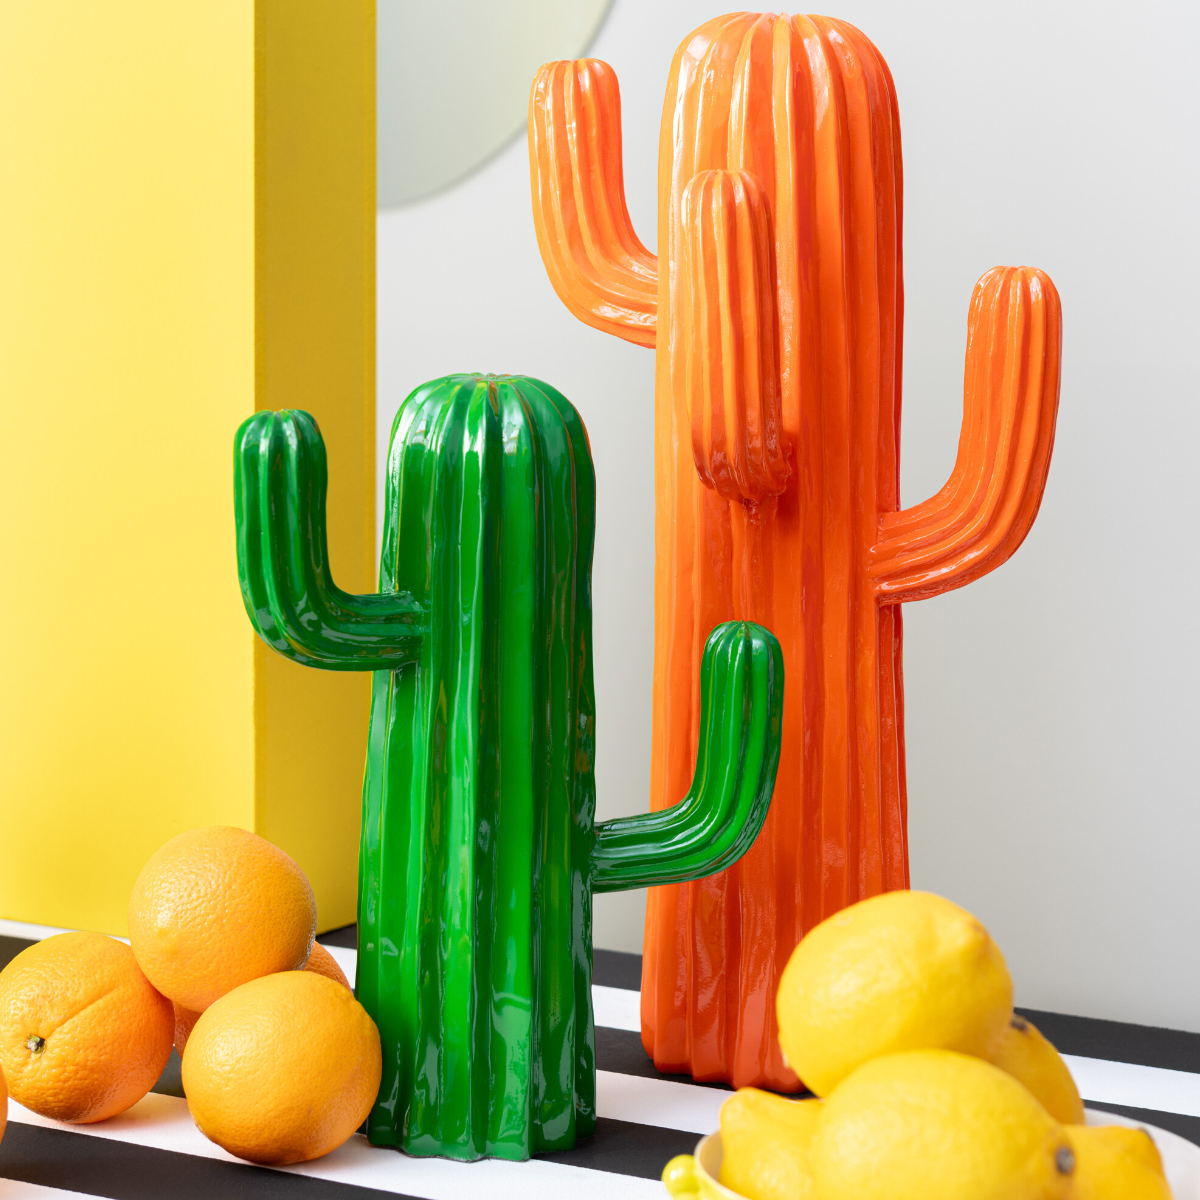 Cactus dcoratif en rsine verte 28 cm